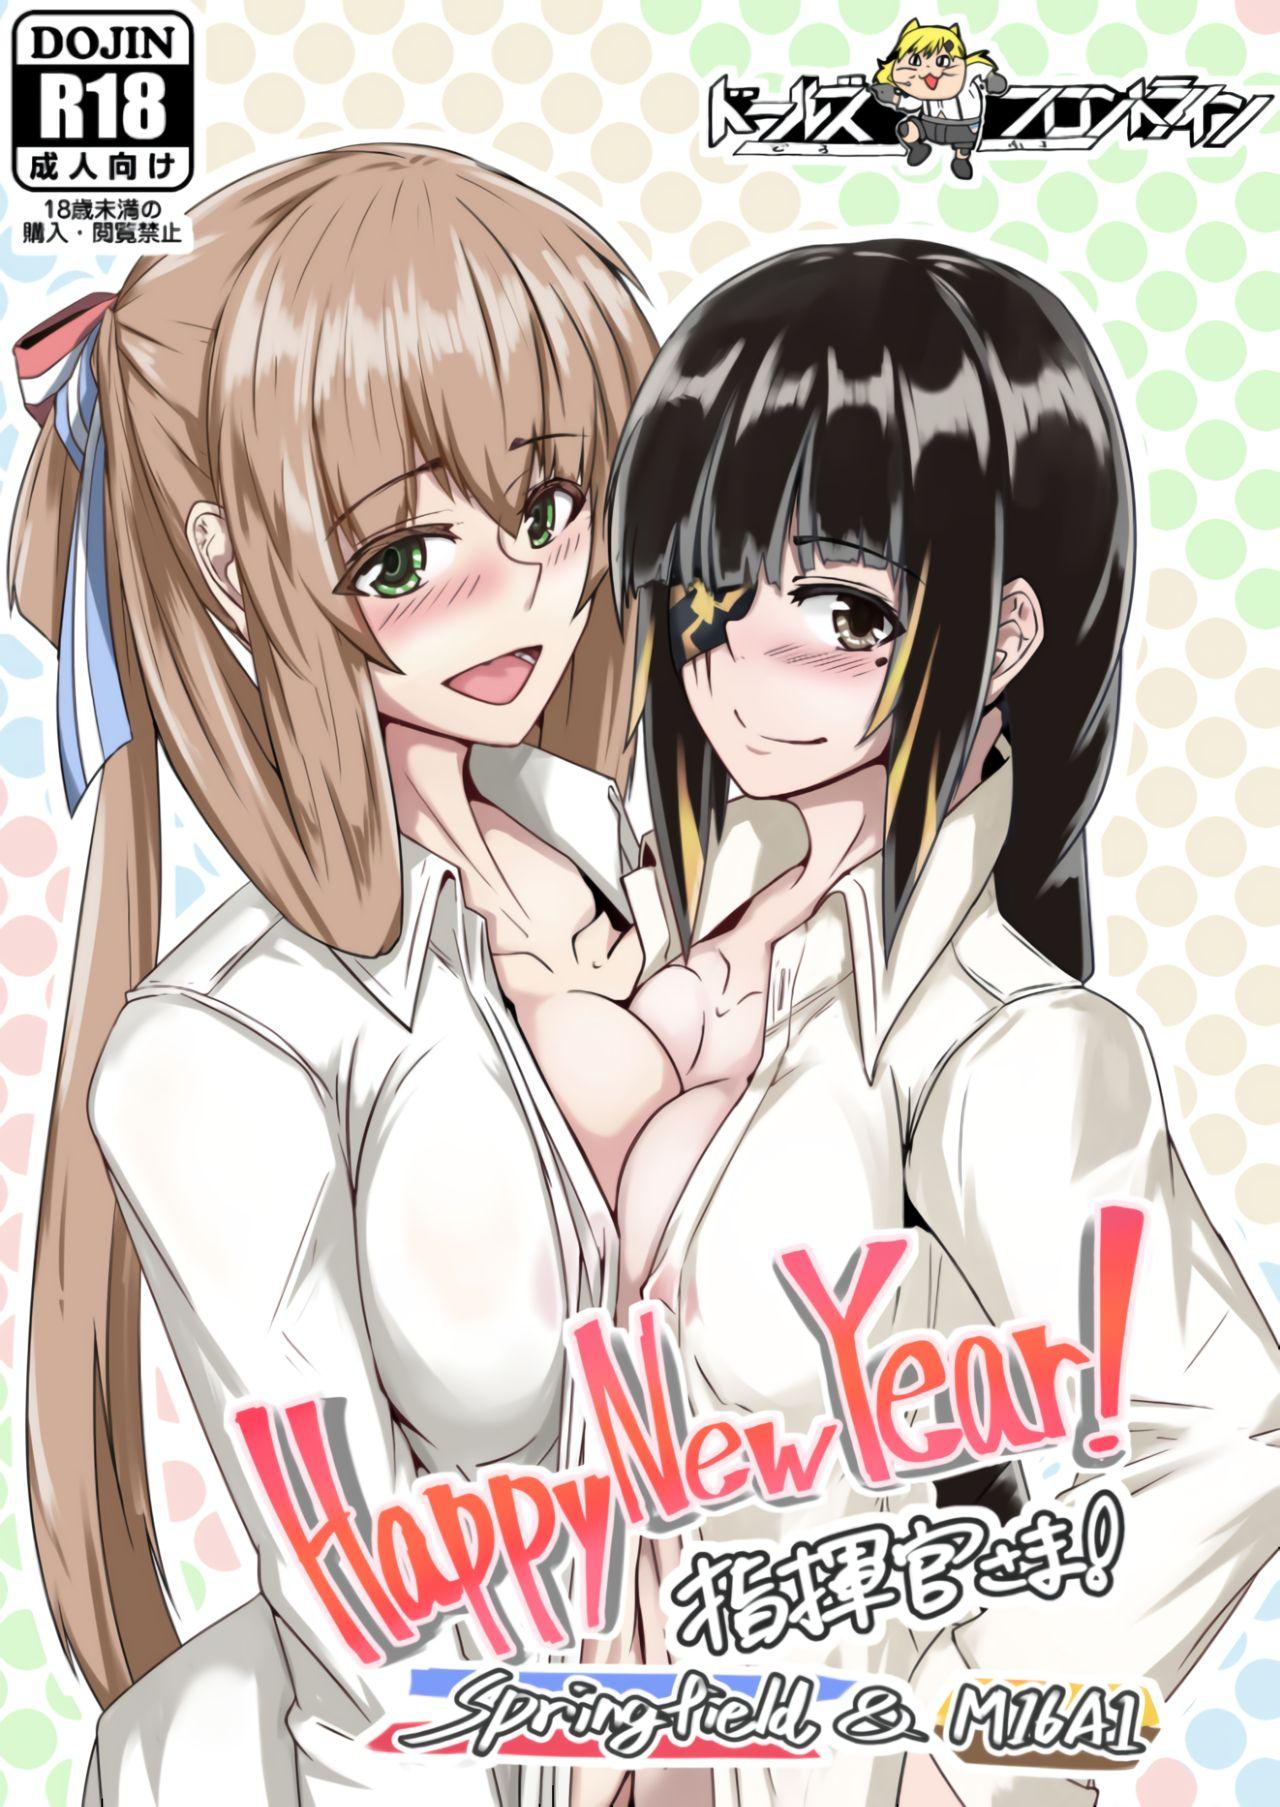 Happy New Year! Shikikan-sama! Springfield & M16A1 0